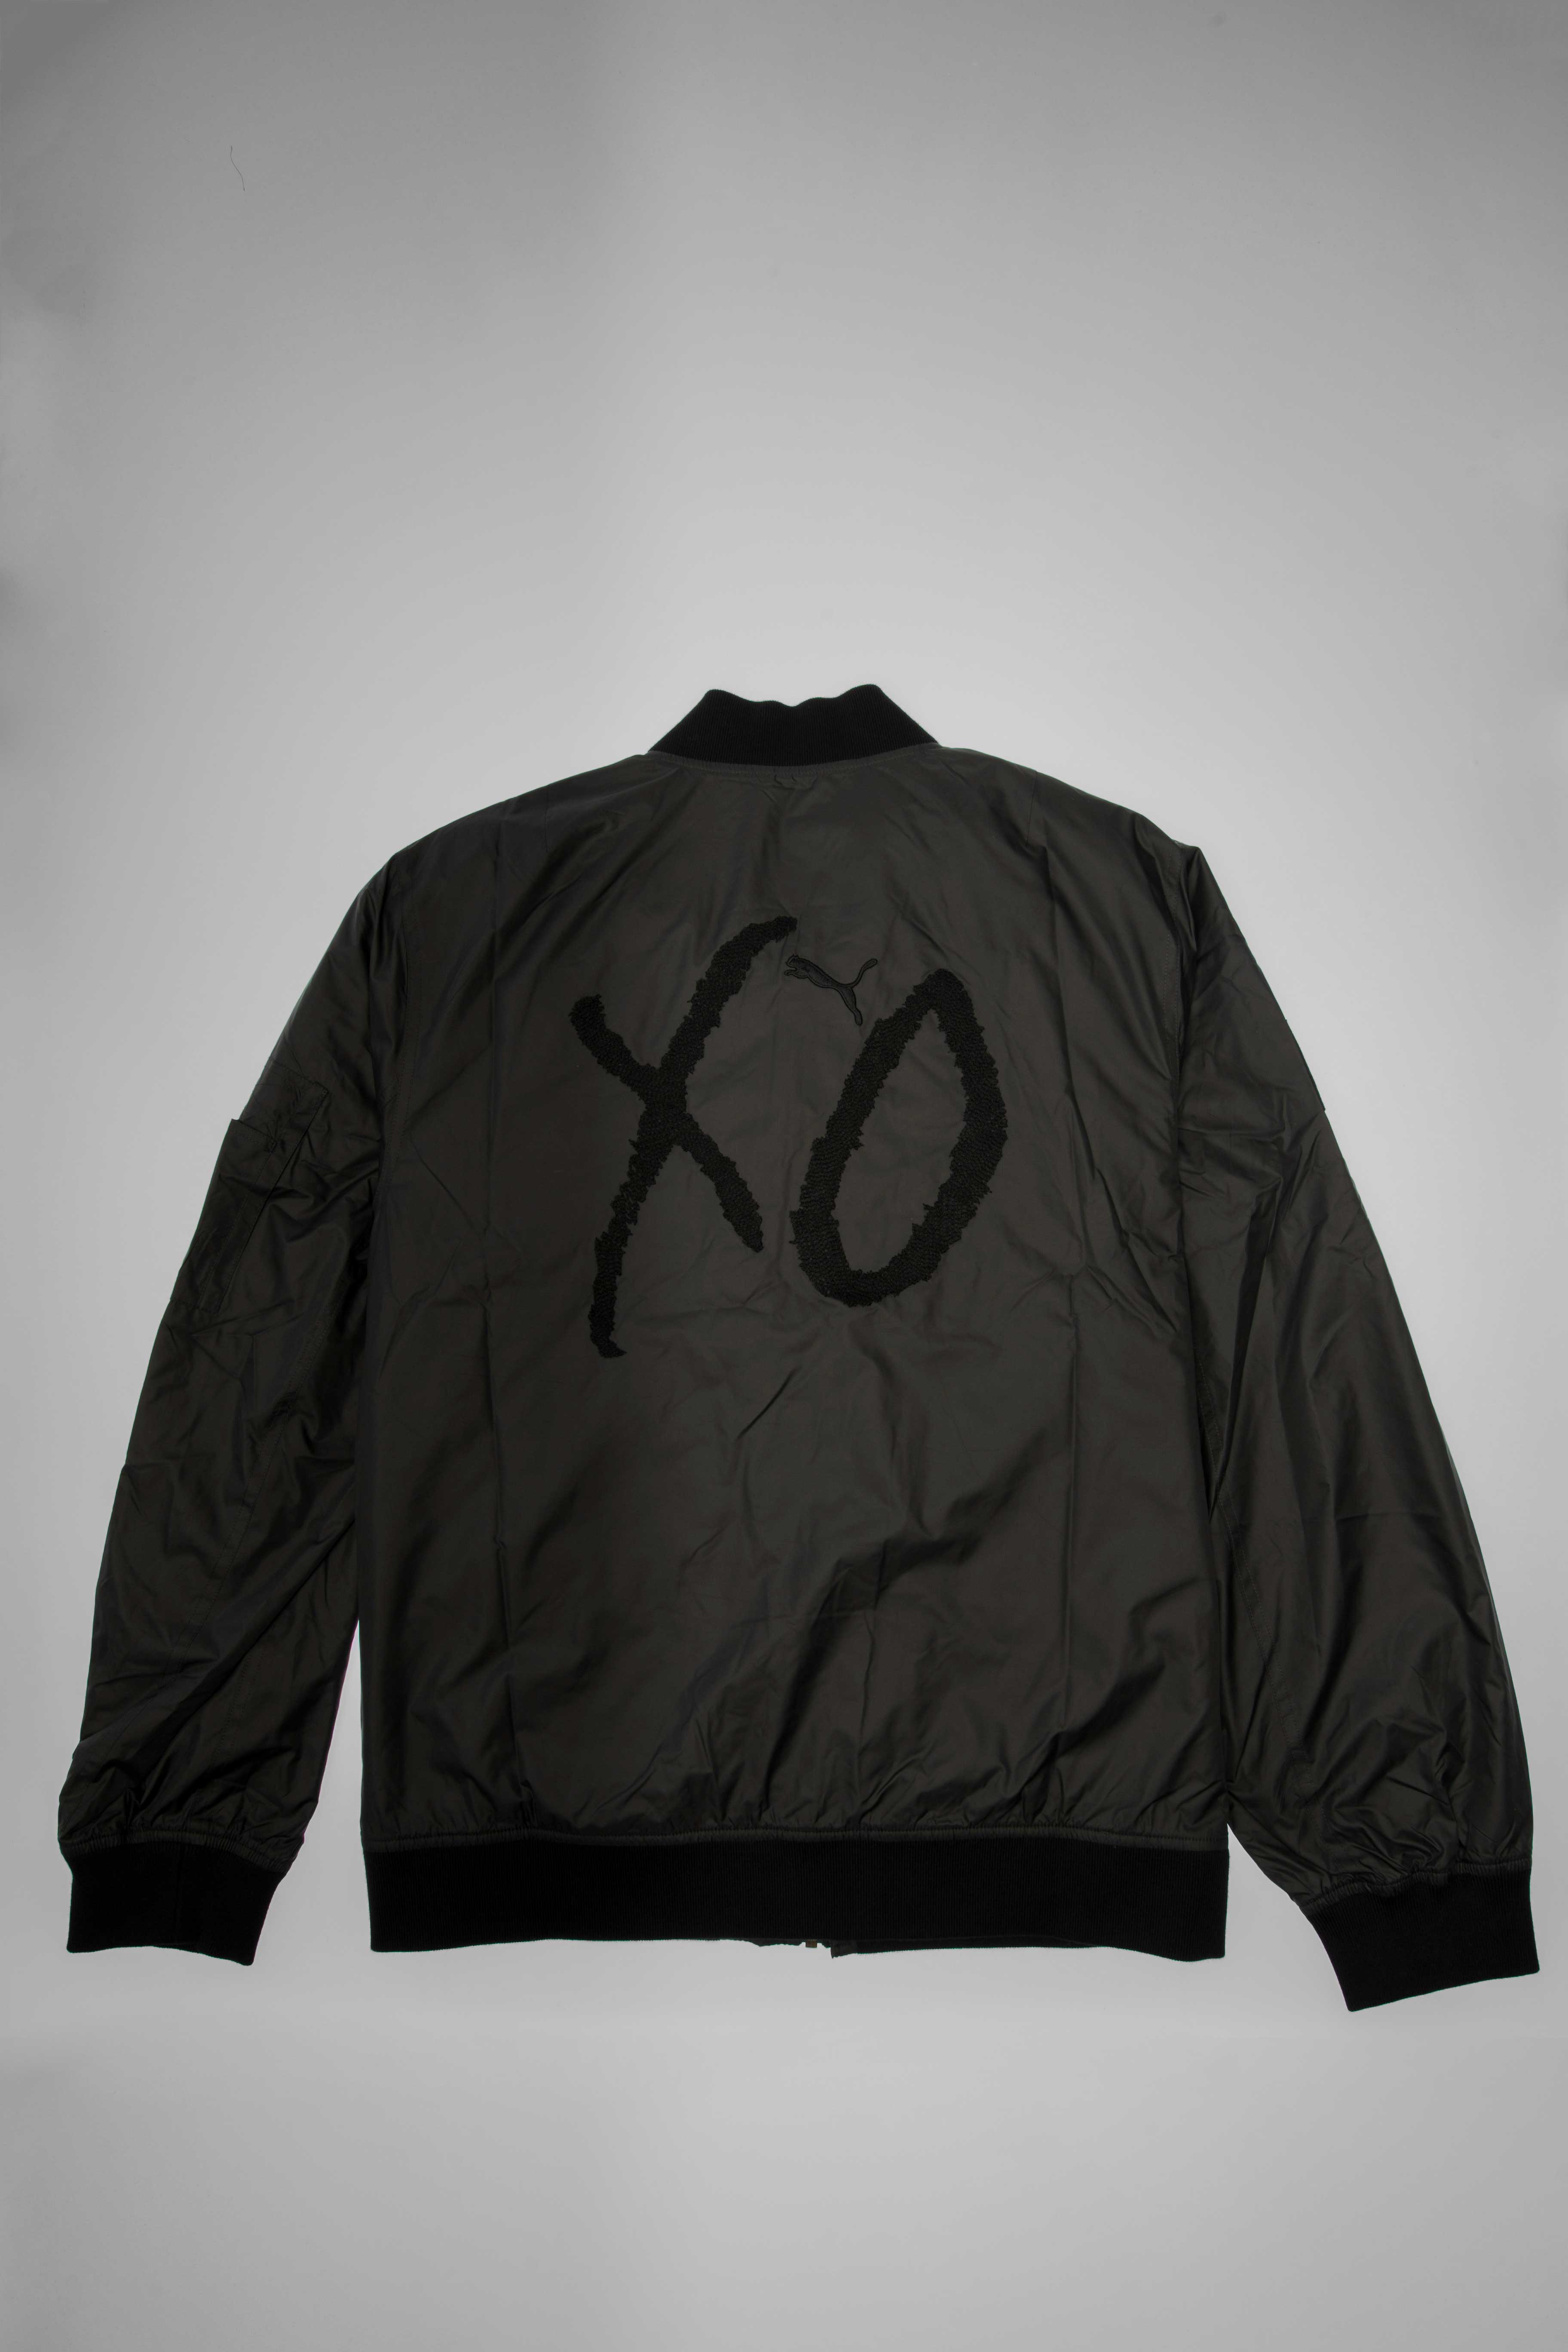 PUMA 575344 01 The Weeknd Collection Xo Mens Nylon Bomber Jacket ...